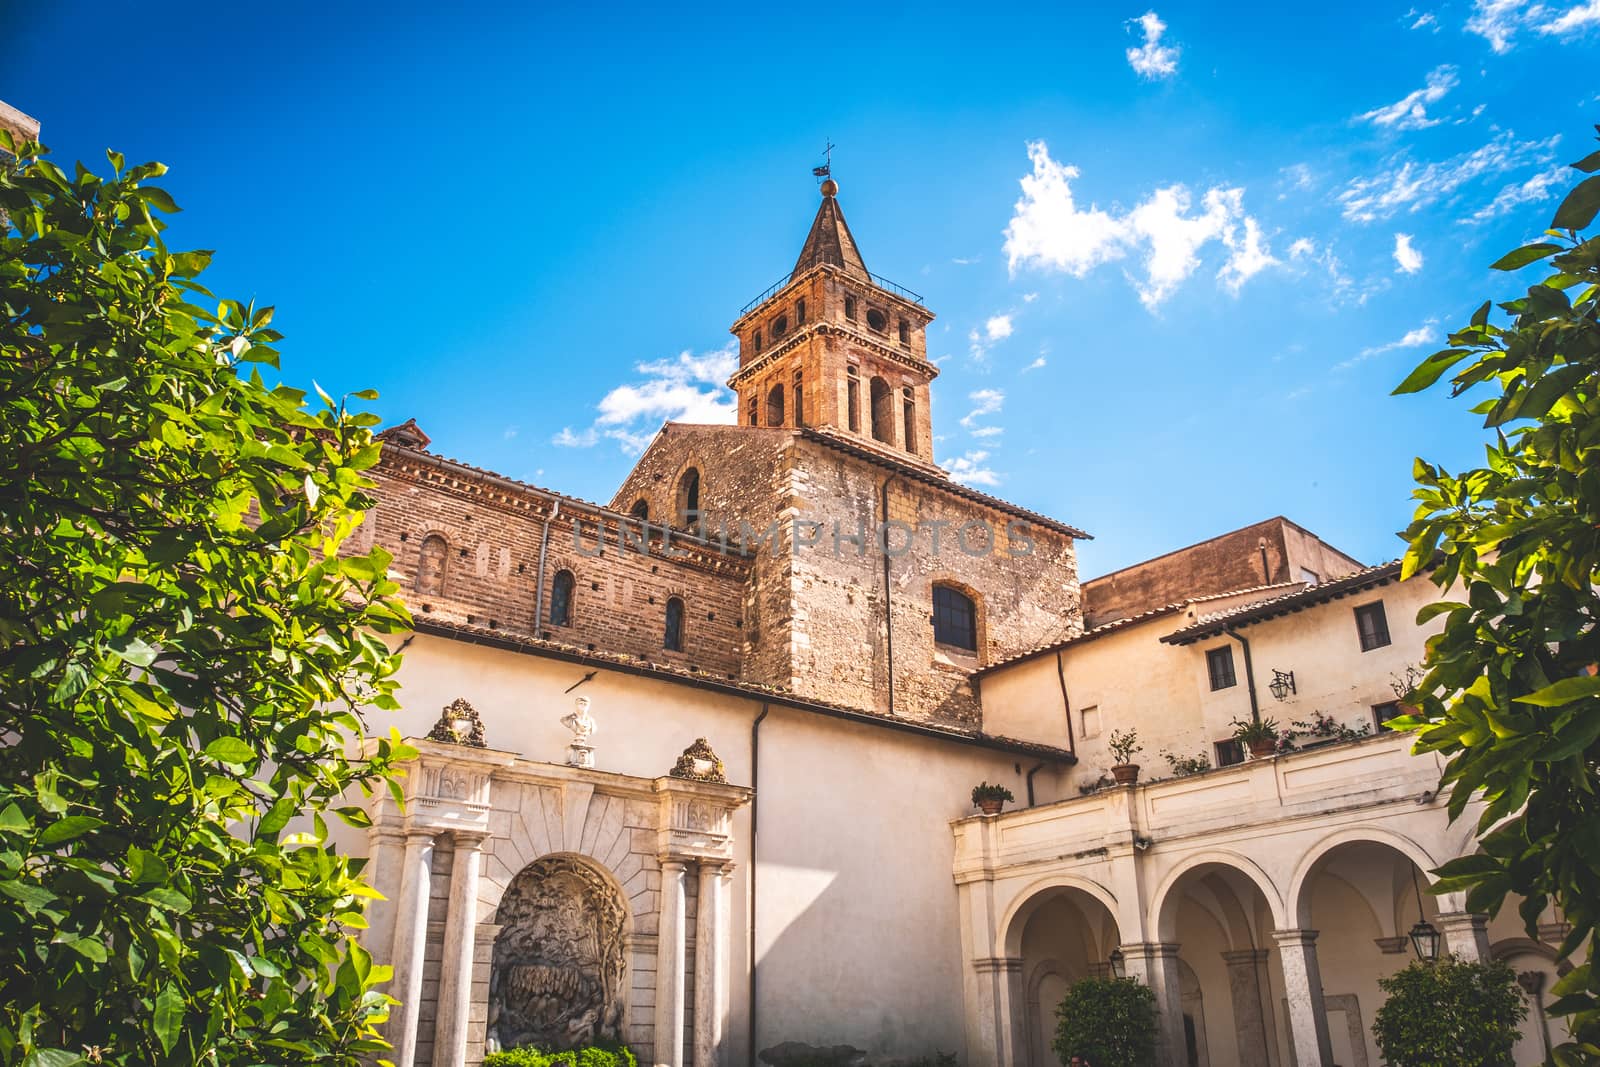 picturesque church in italy - cathedral of Tivoli in Lazio .